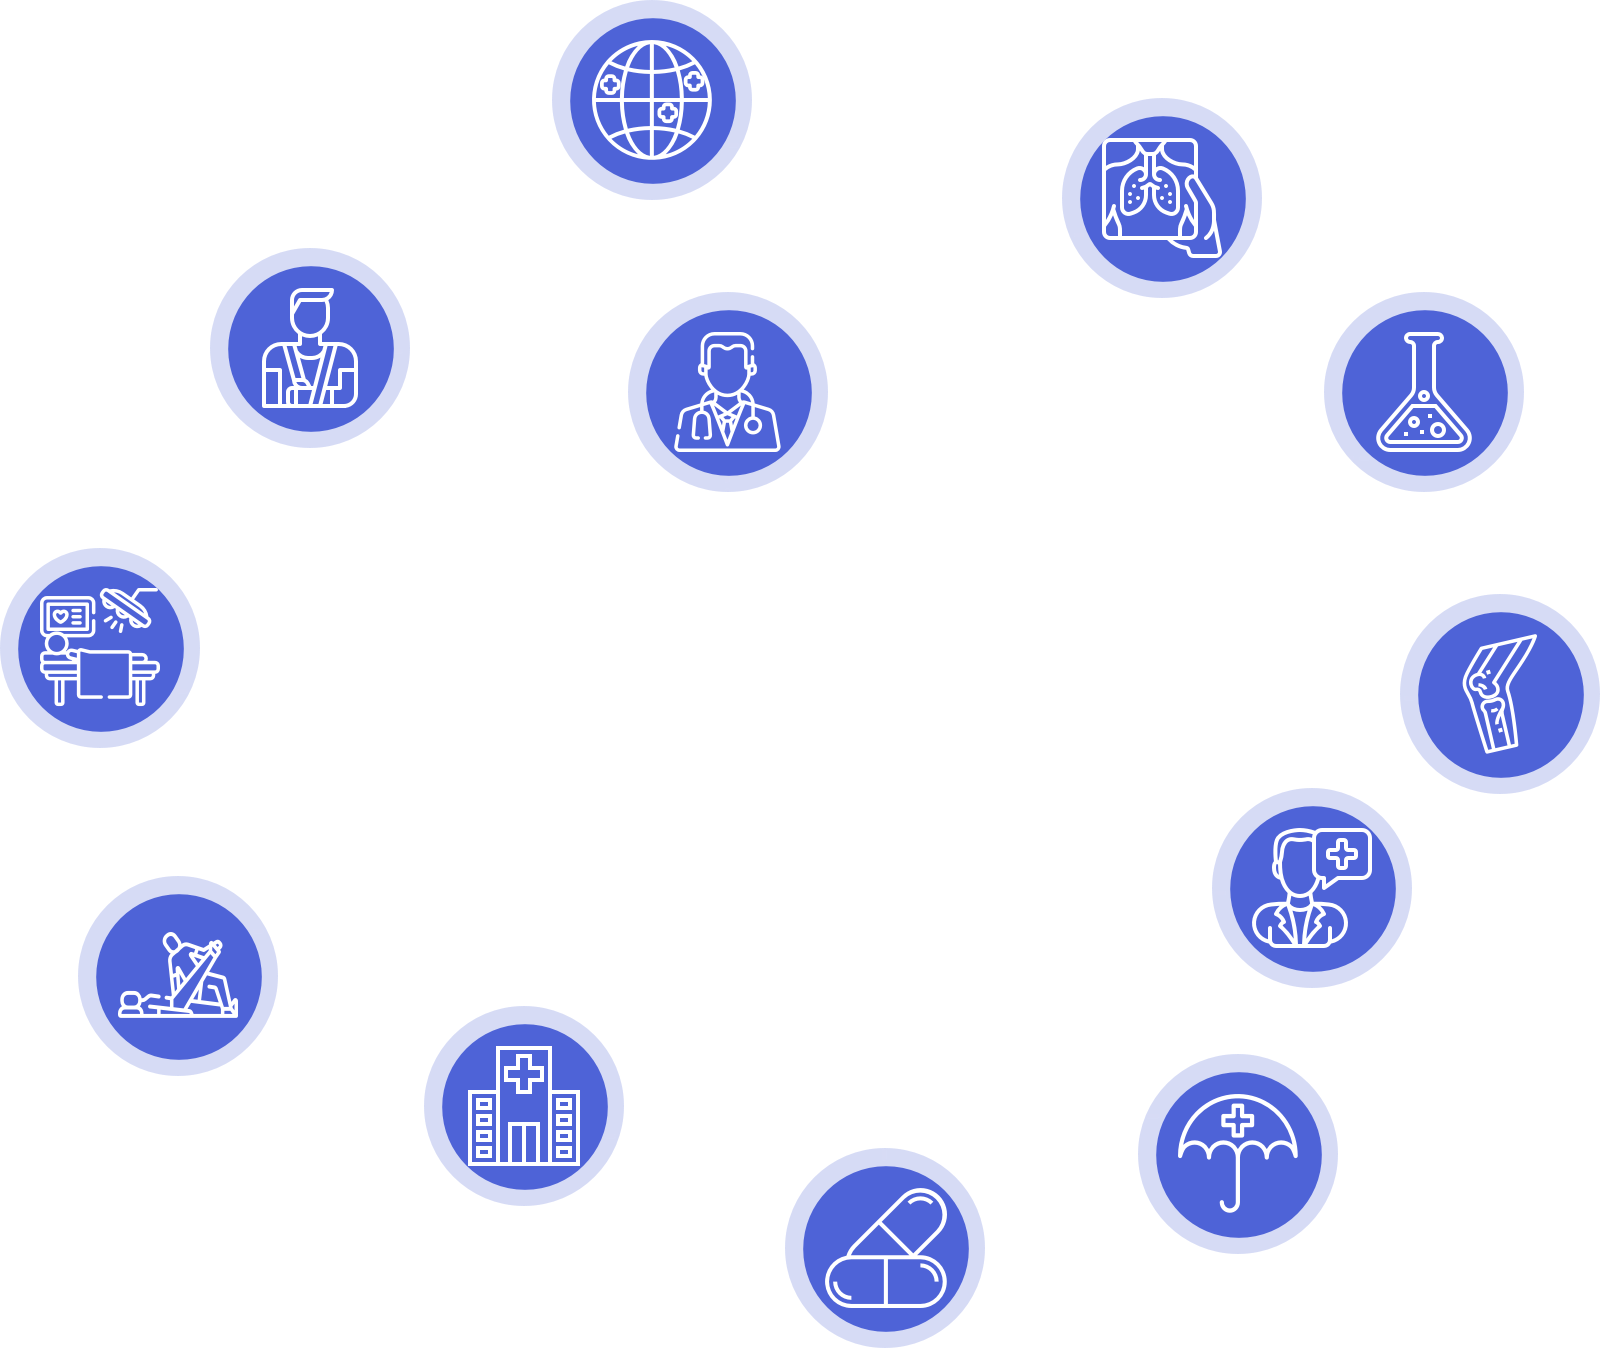 Mediphore ecosystem